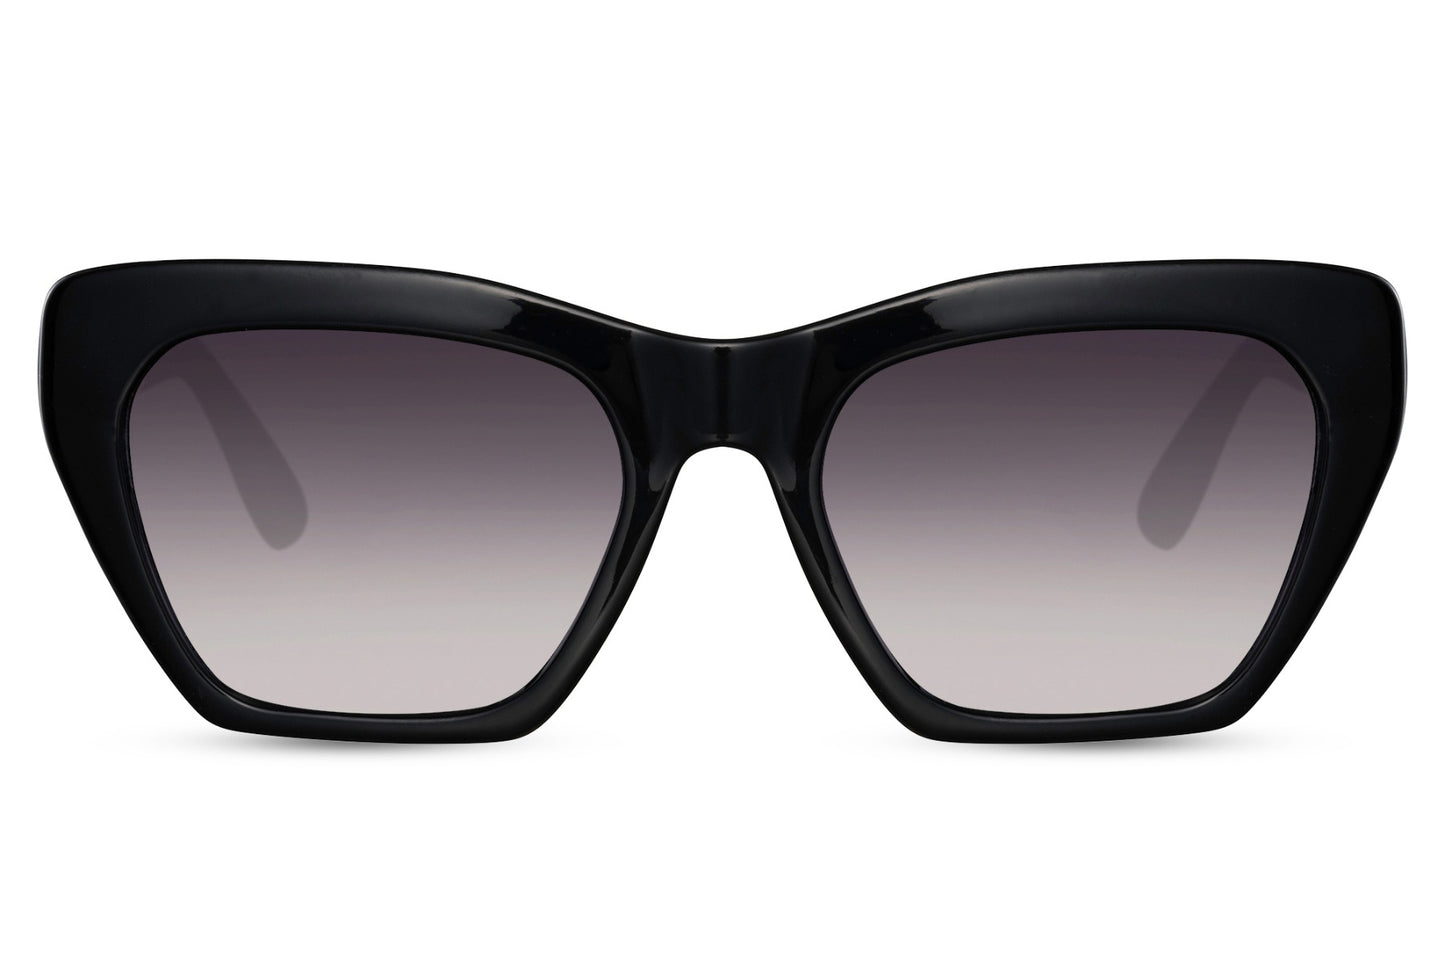 New Geometric Cateye Sunglasses